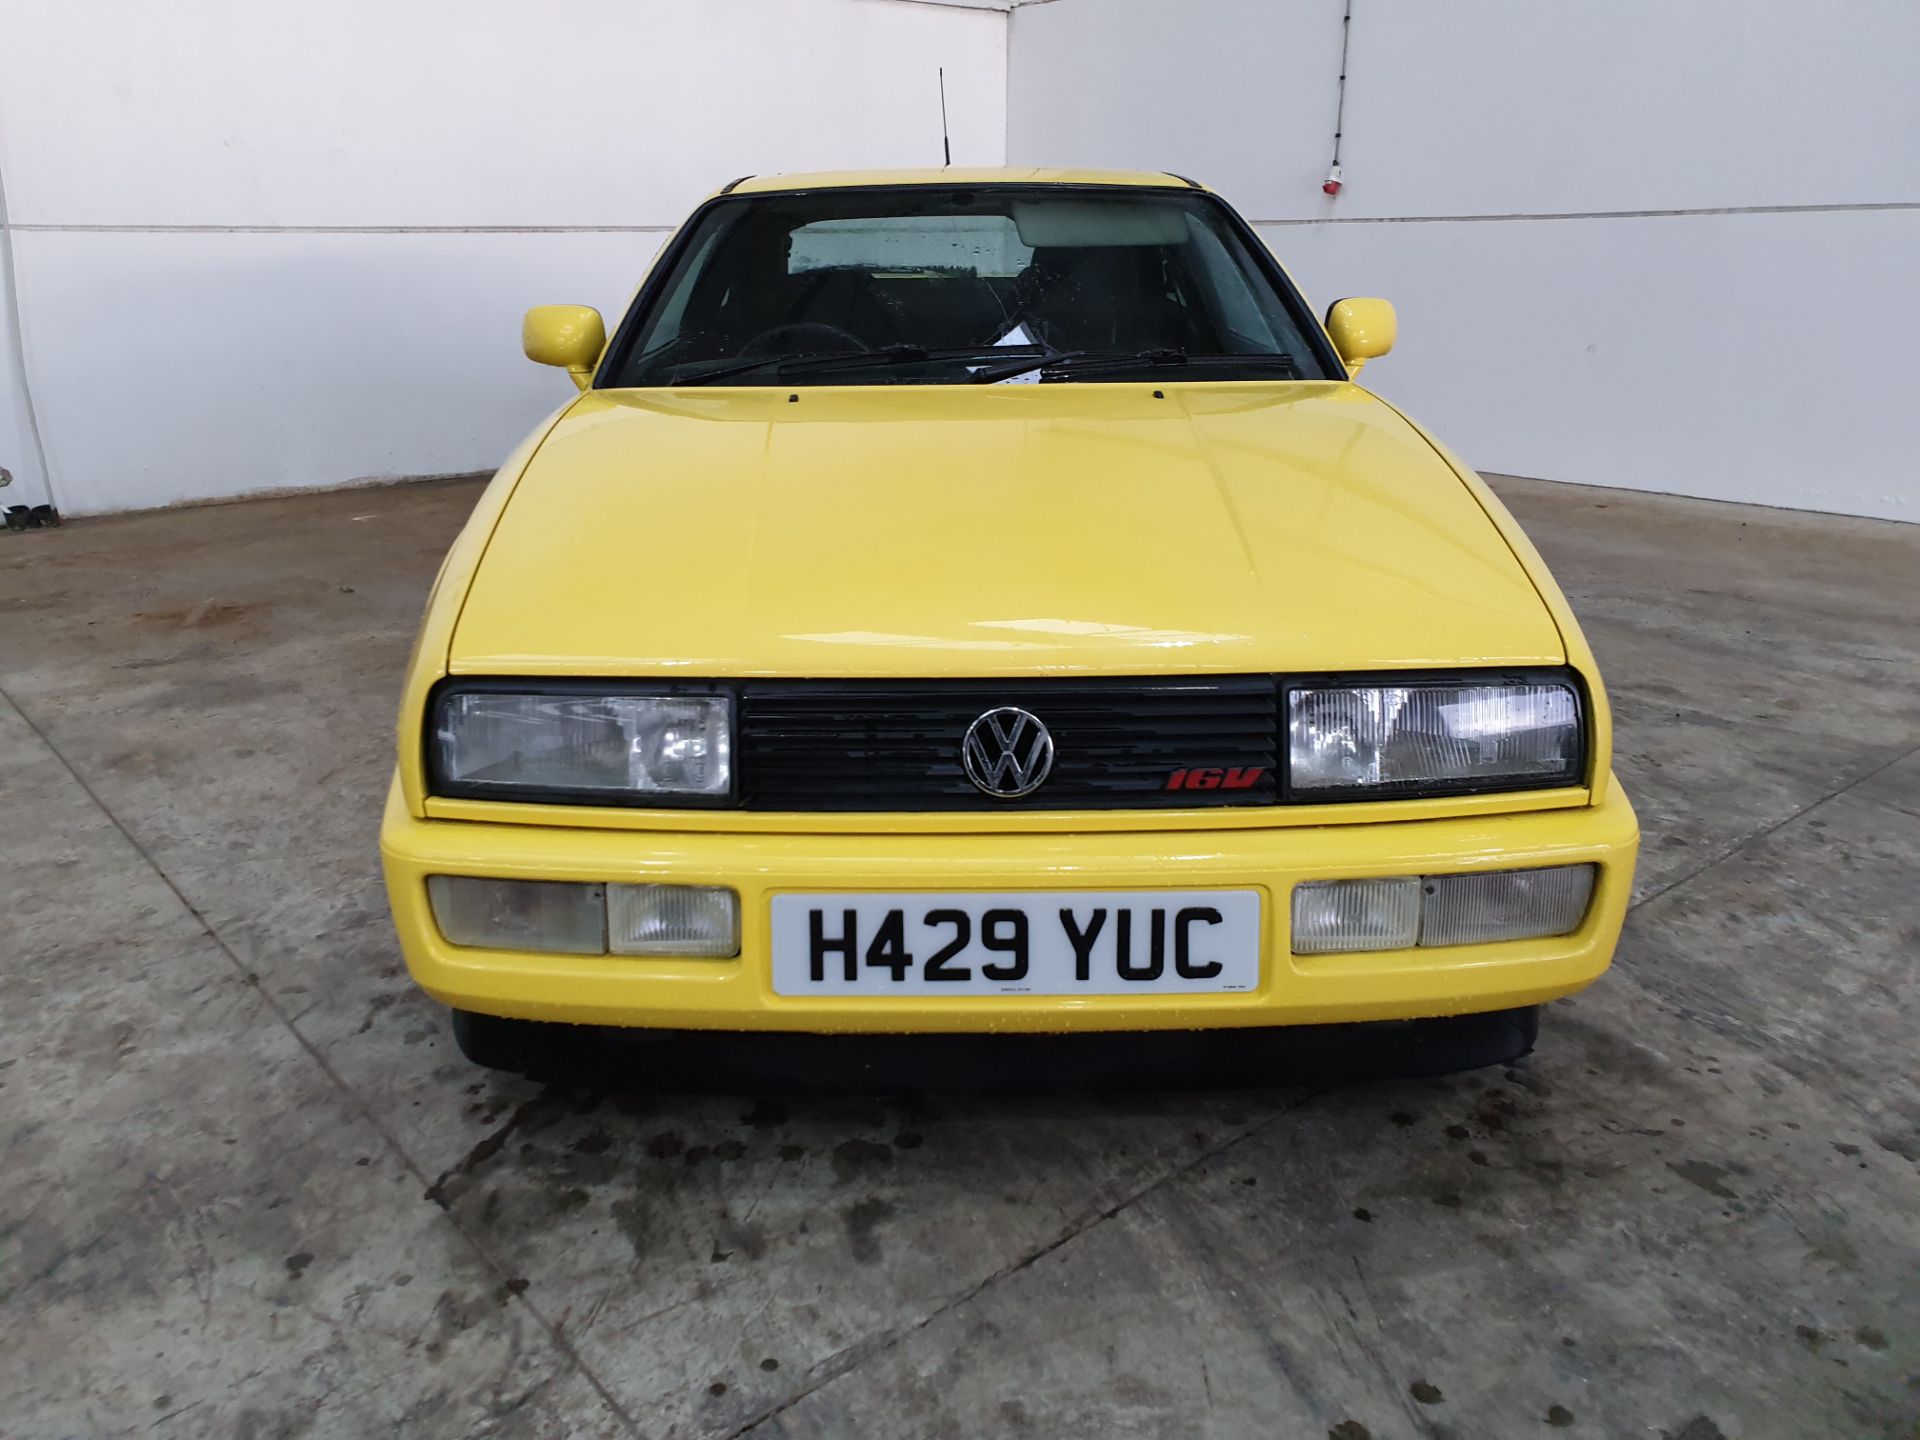 1990 VW Corrado 16v - Image 8 of 15